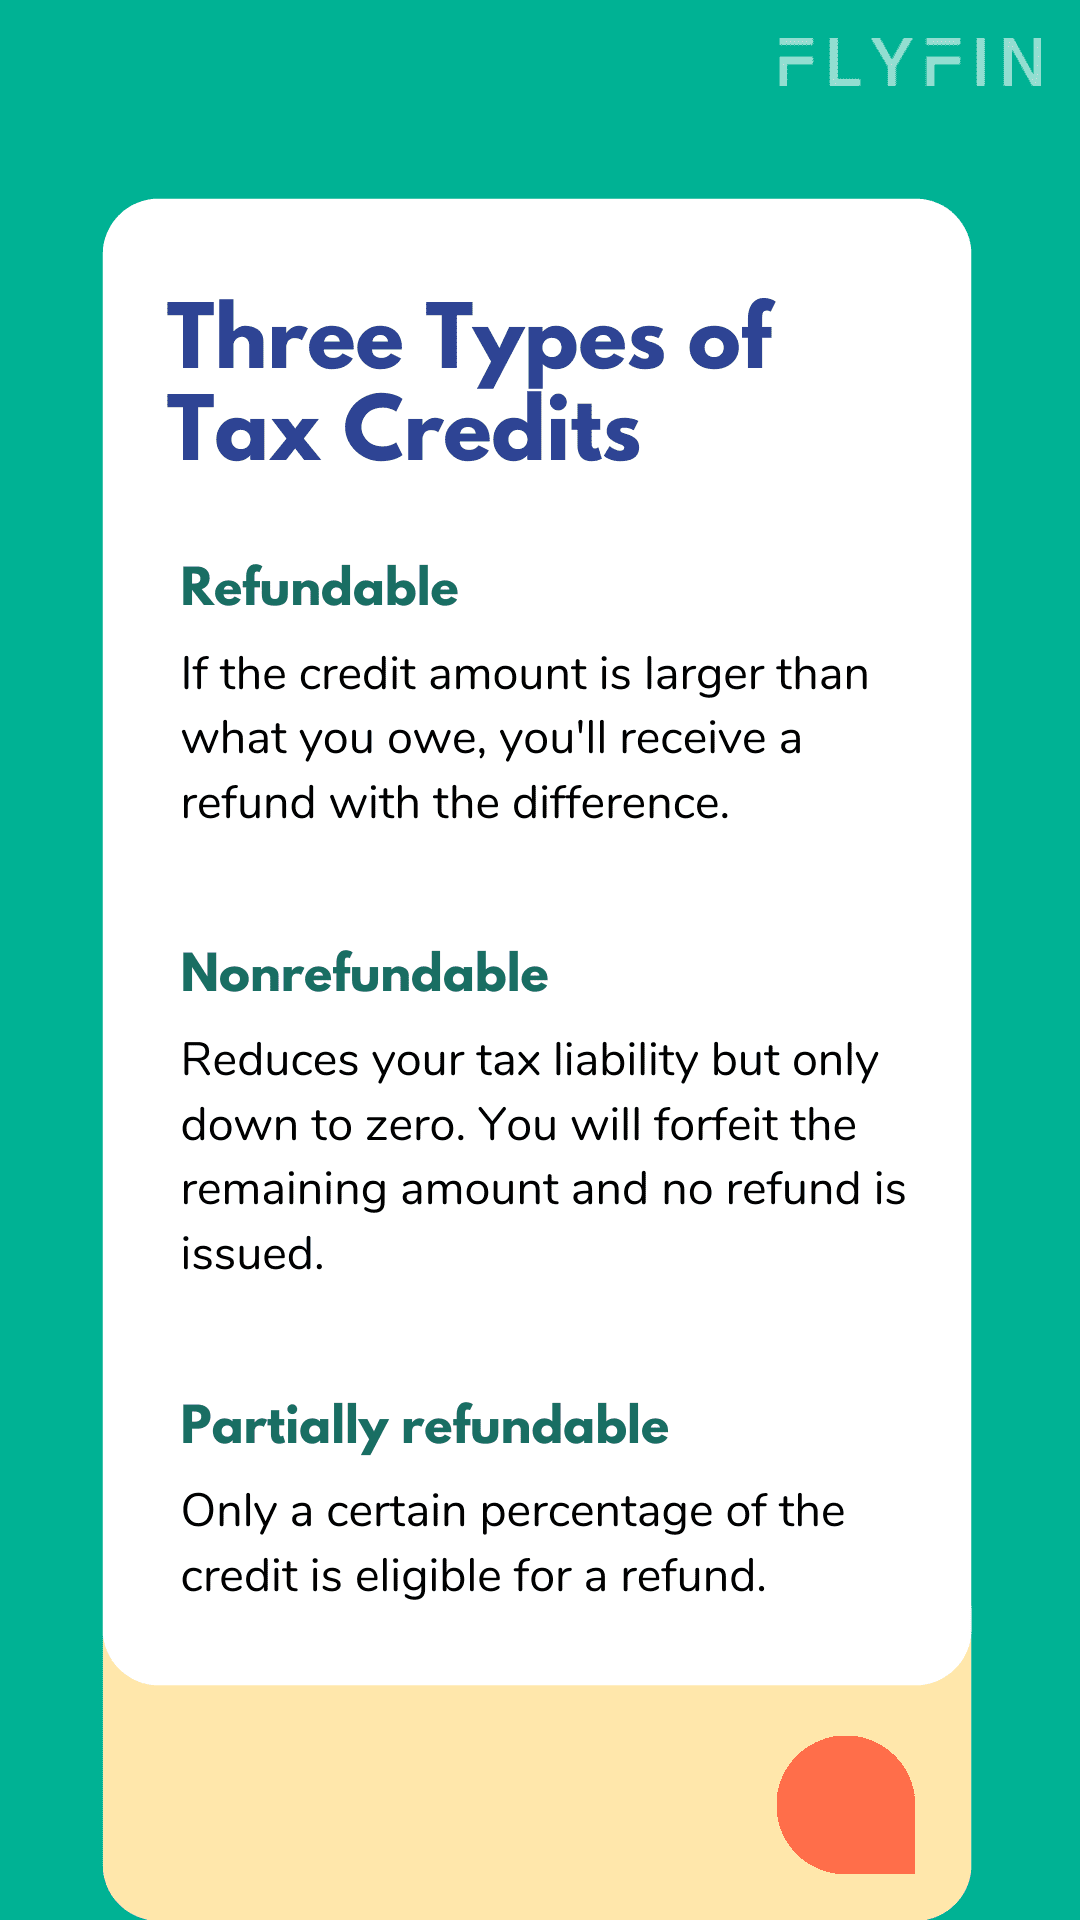 How do tax credits work?